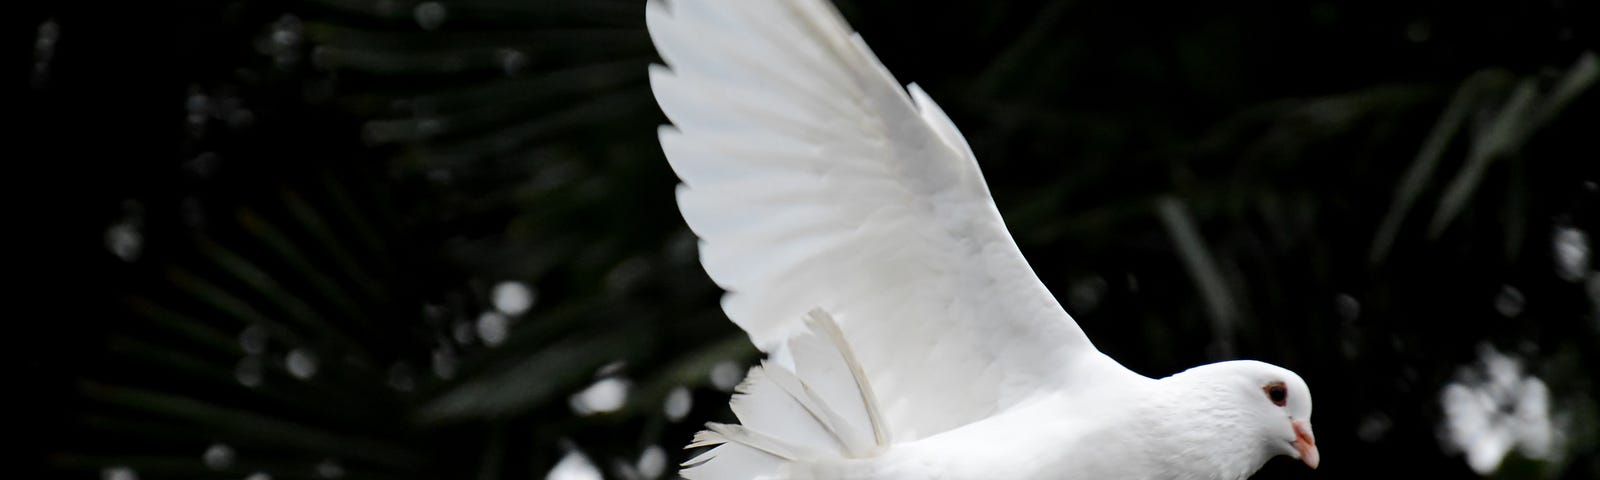 the Holy Spirit like a dove